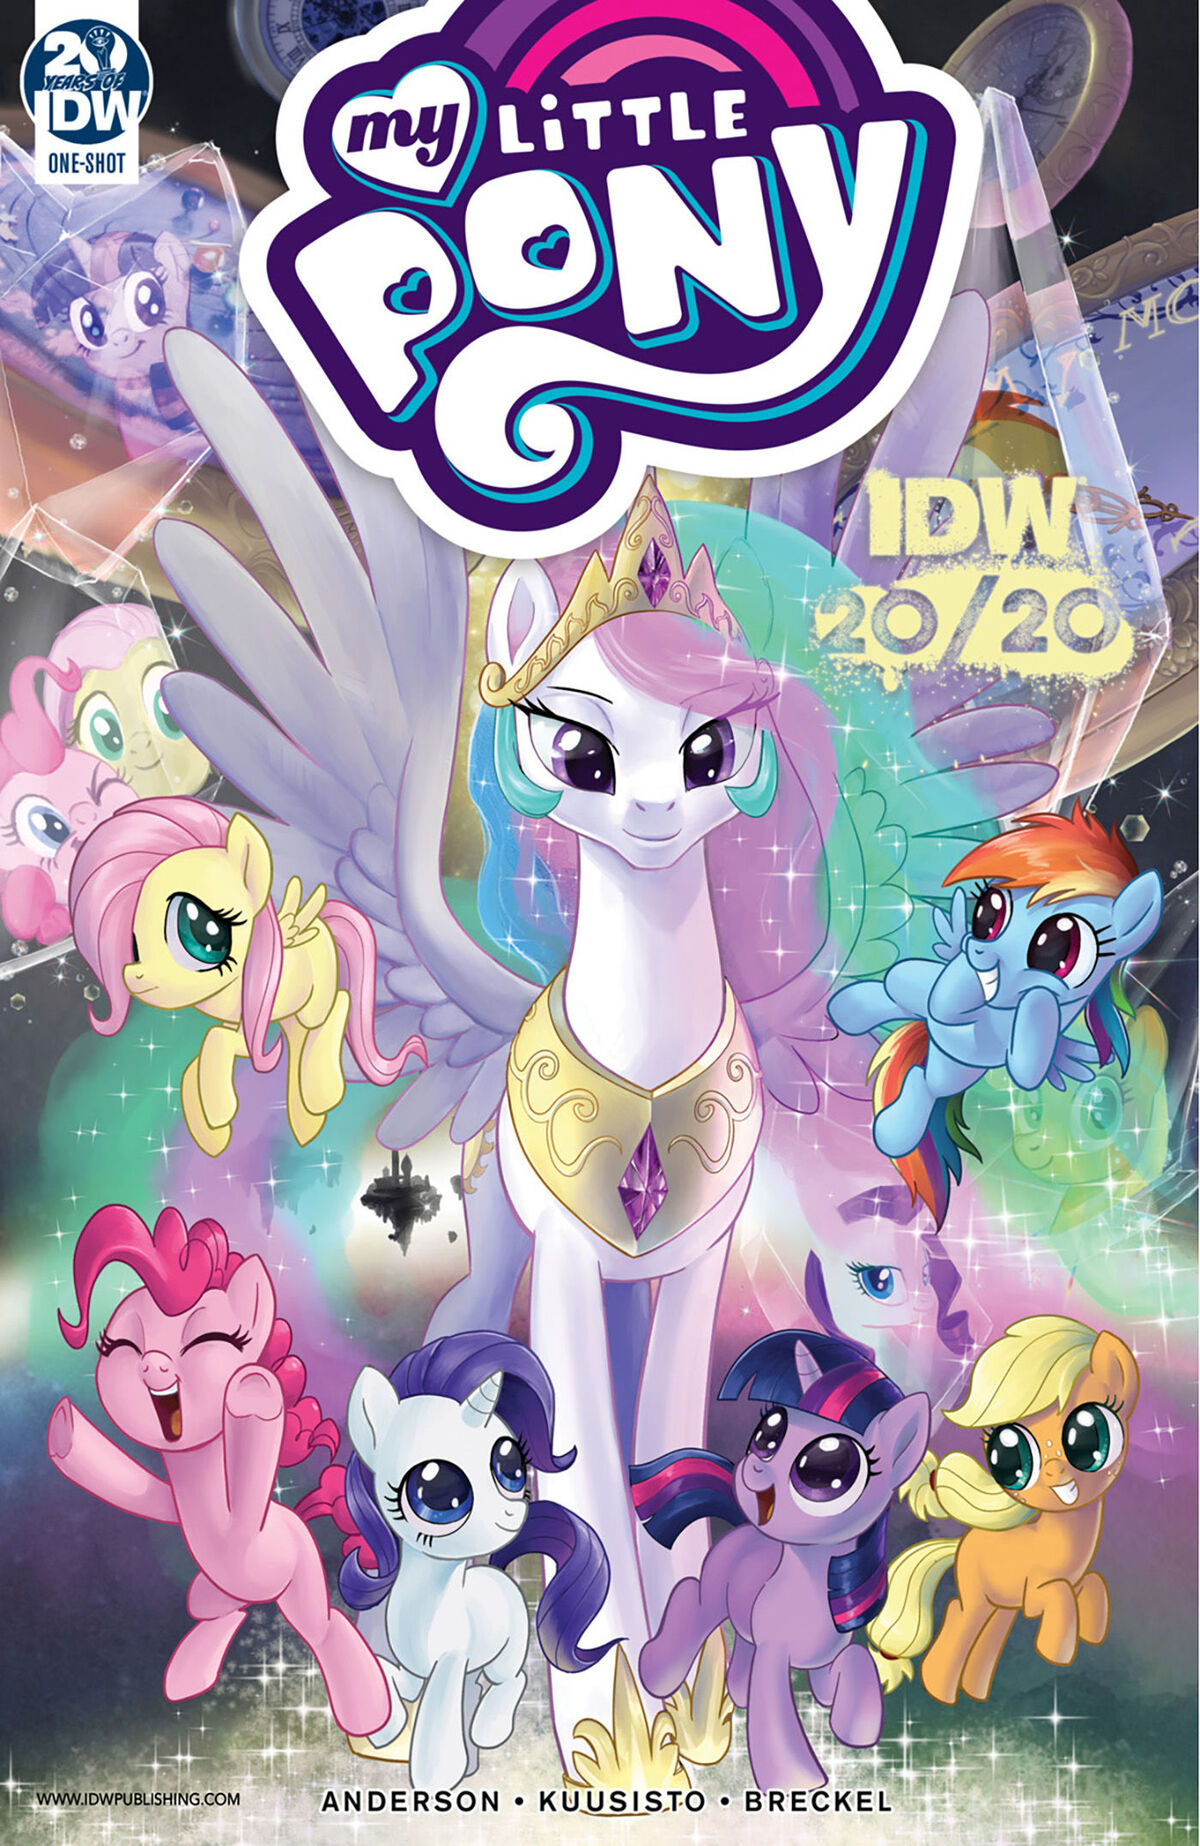 My Little Pony: IDW 20 20. My Little Pony Friendship Is Magic